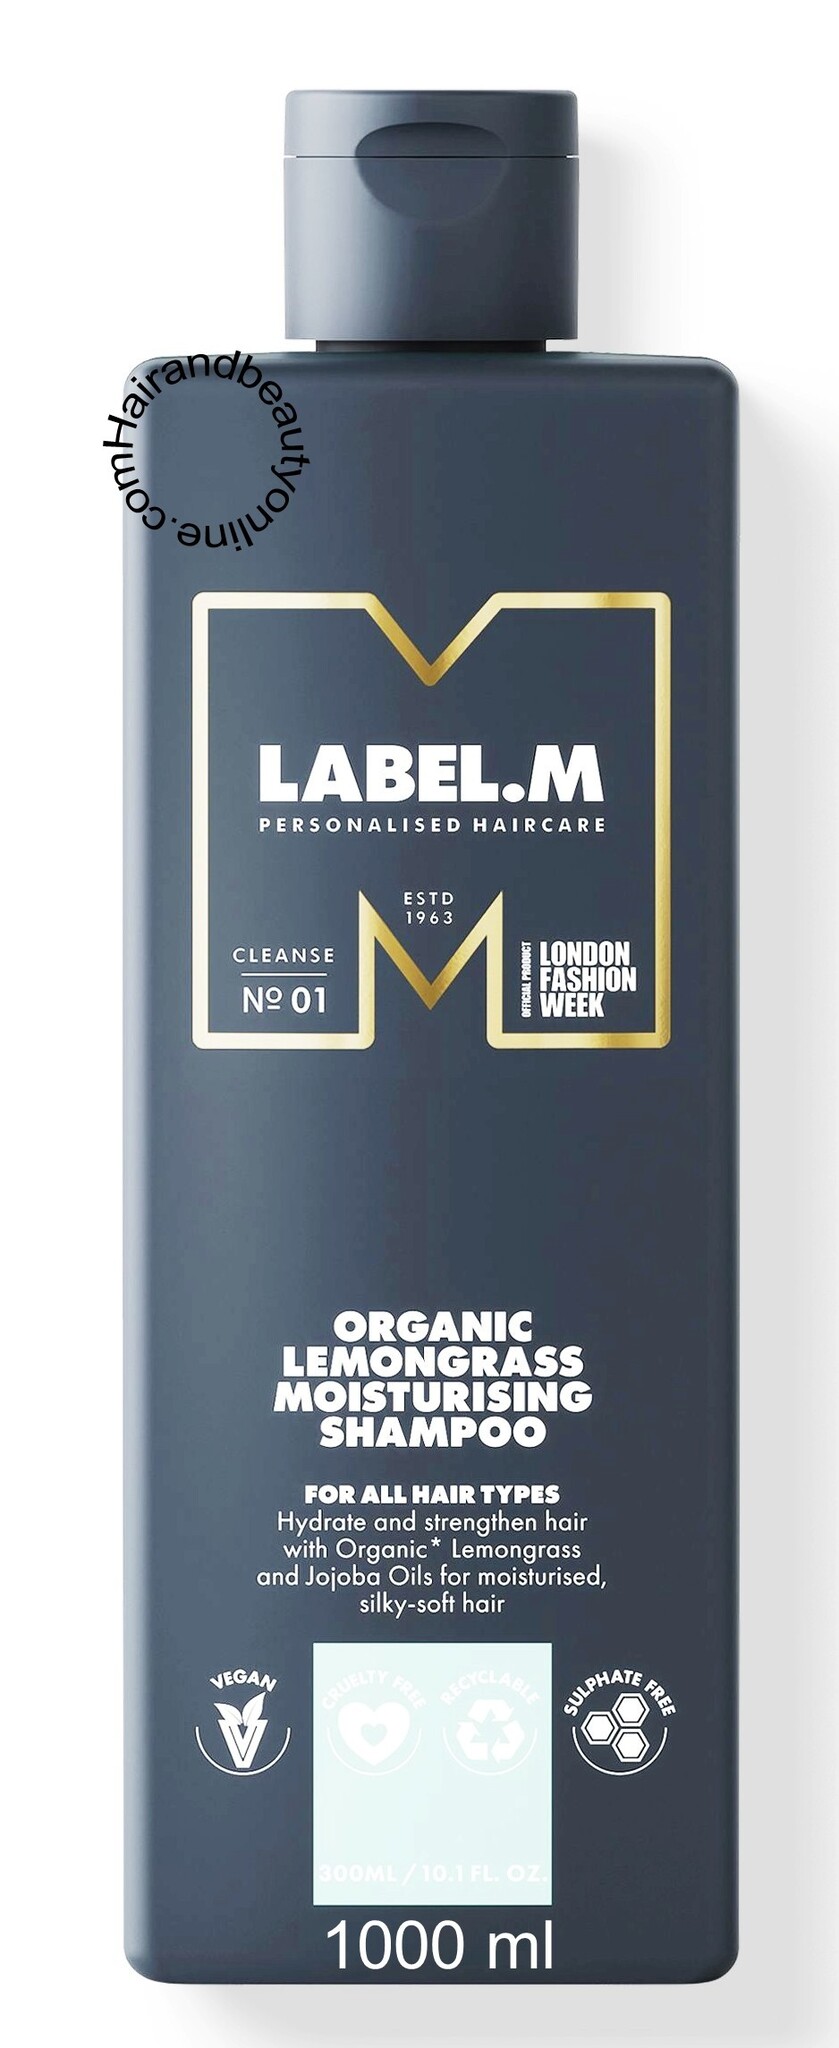 Label.m Organic Lemongrass Moisturising Shampoo 1000ml